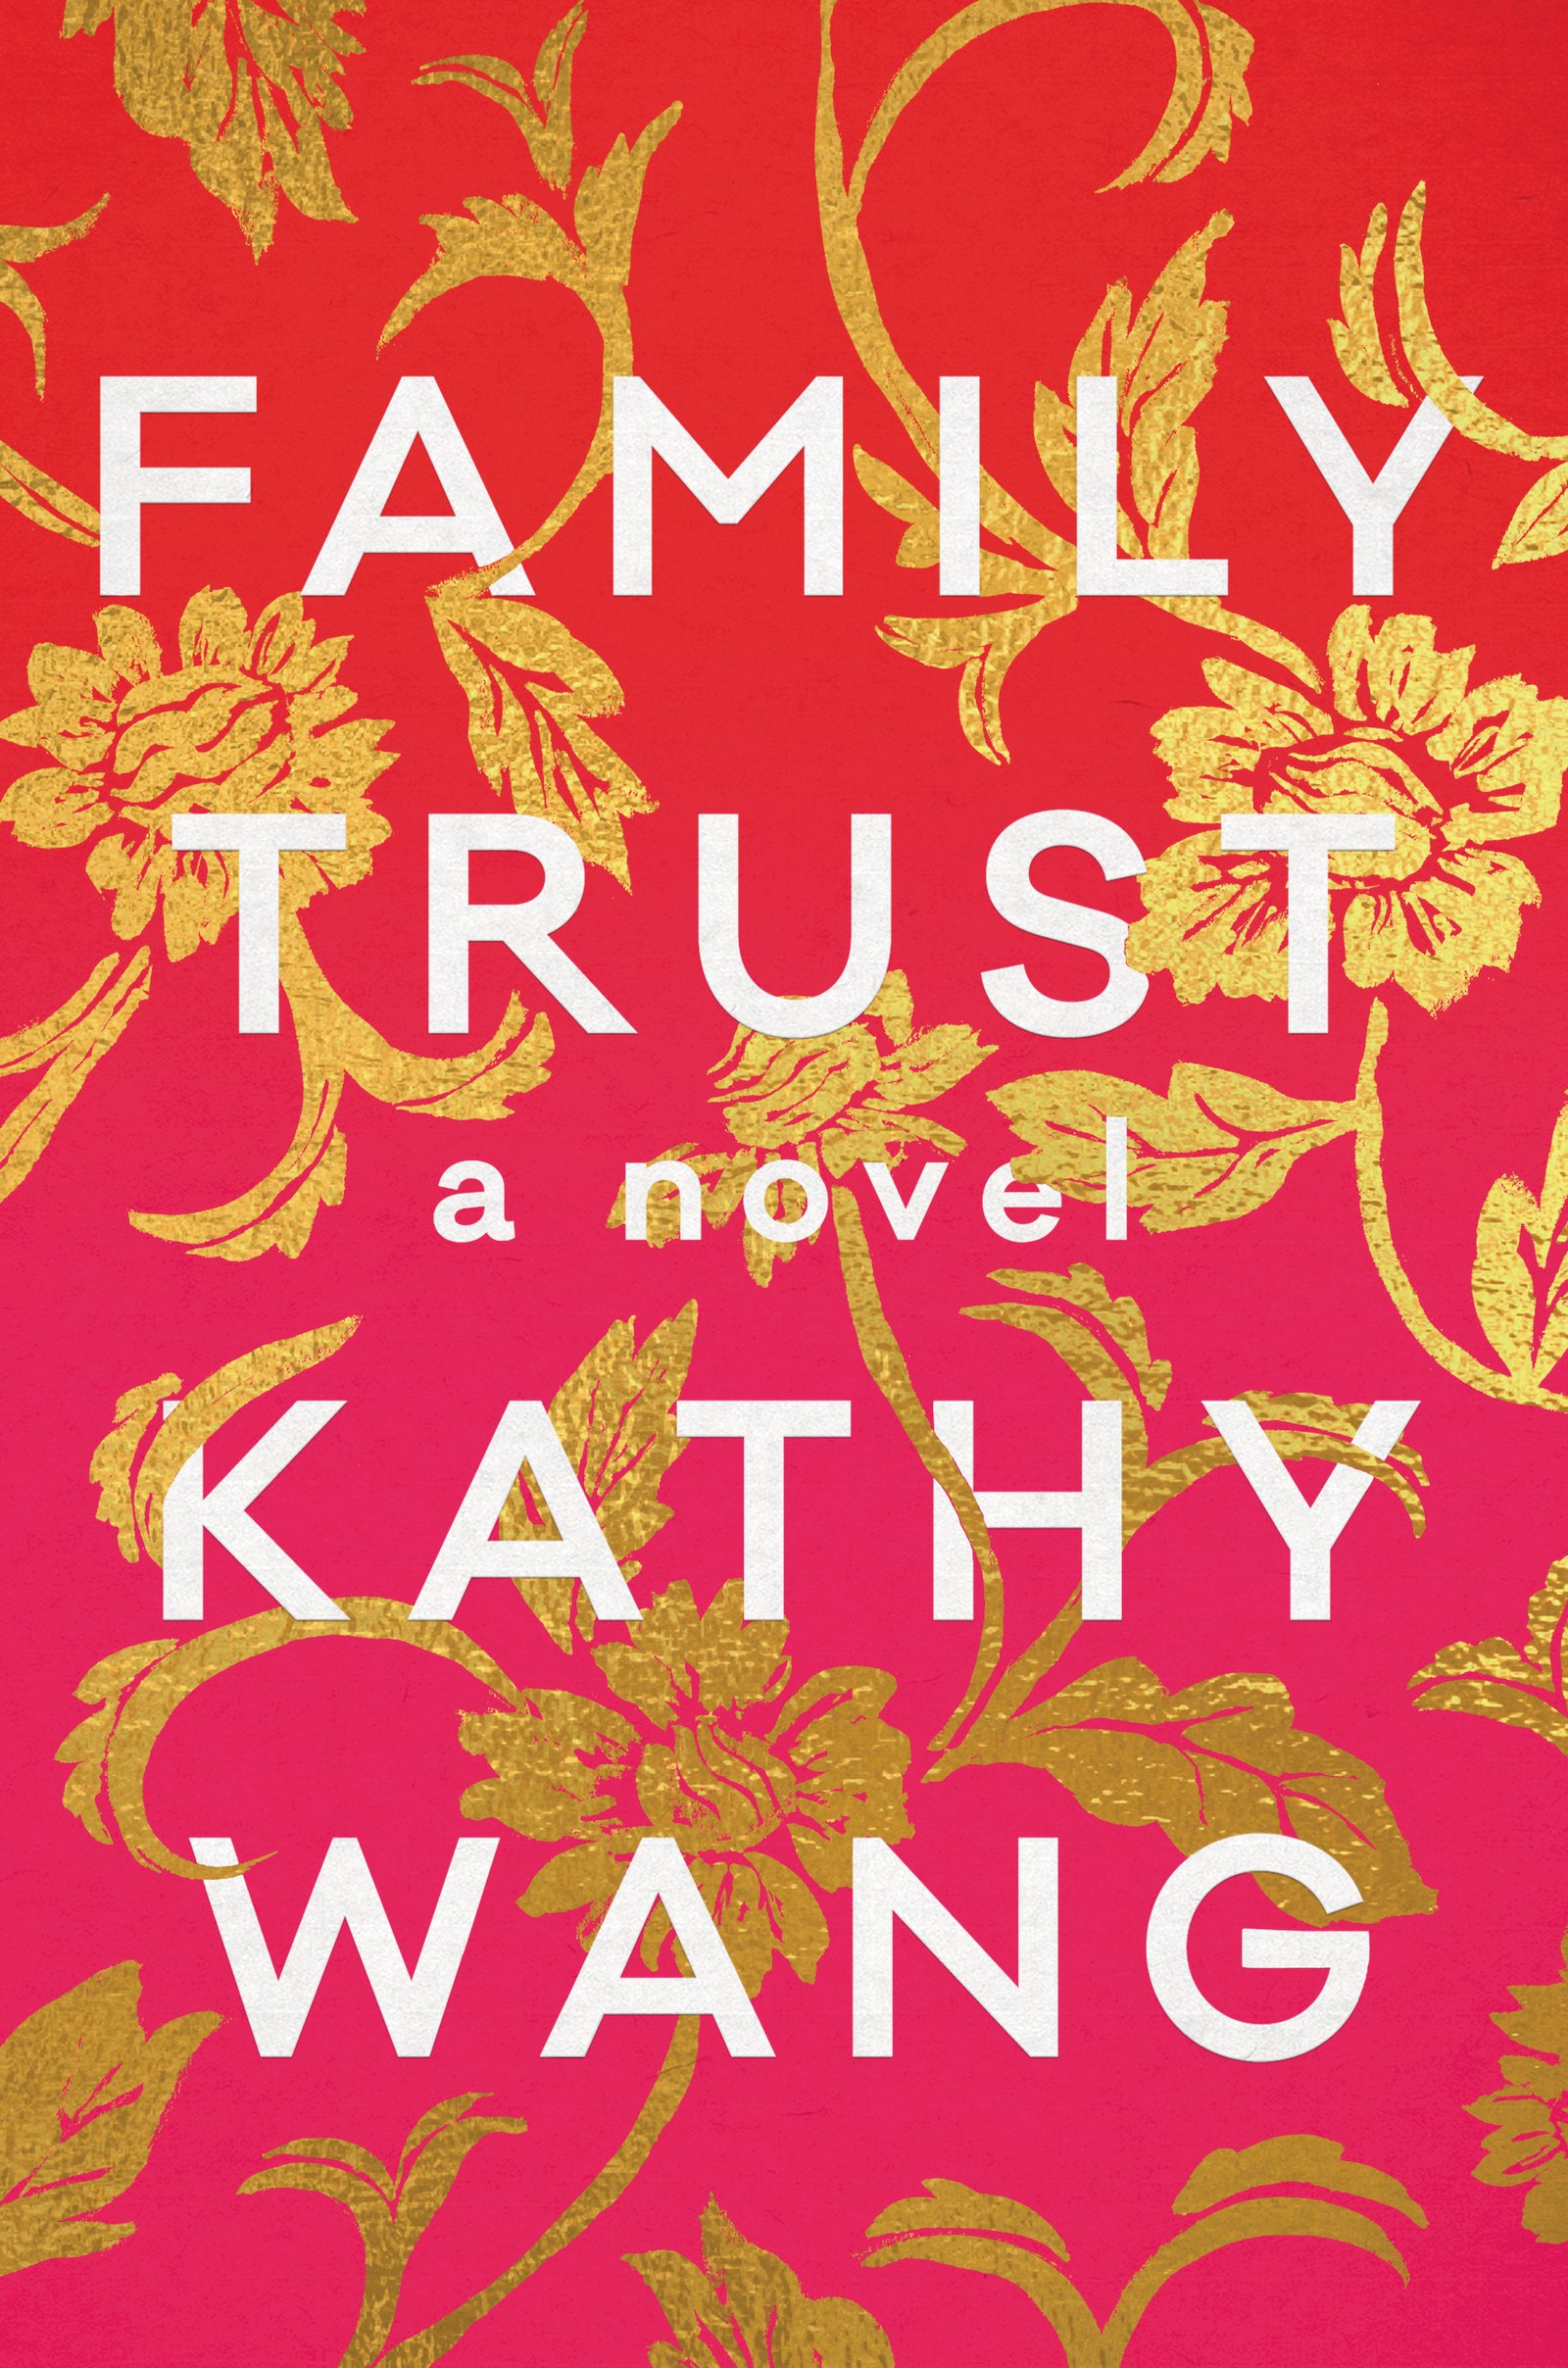 Family Trust: A Novel